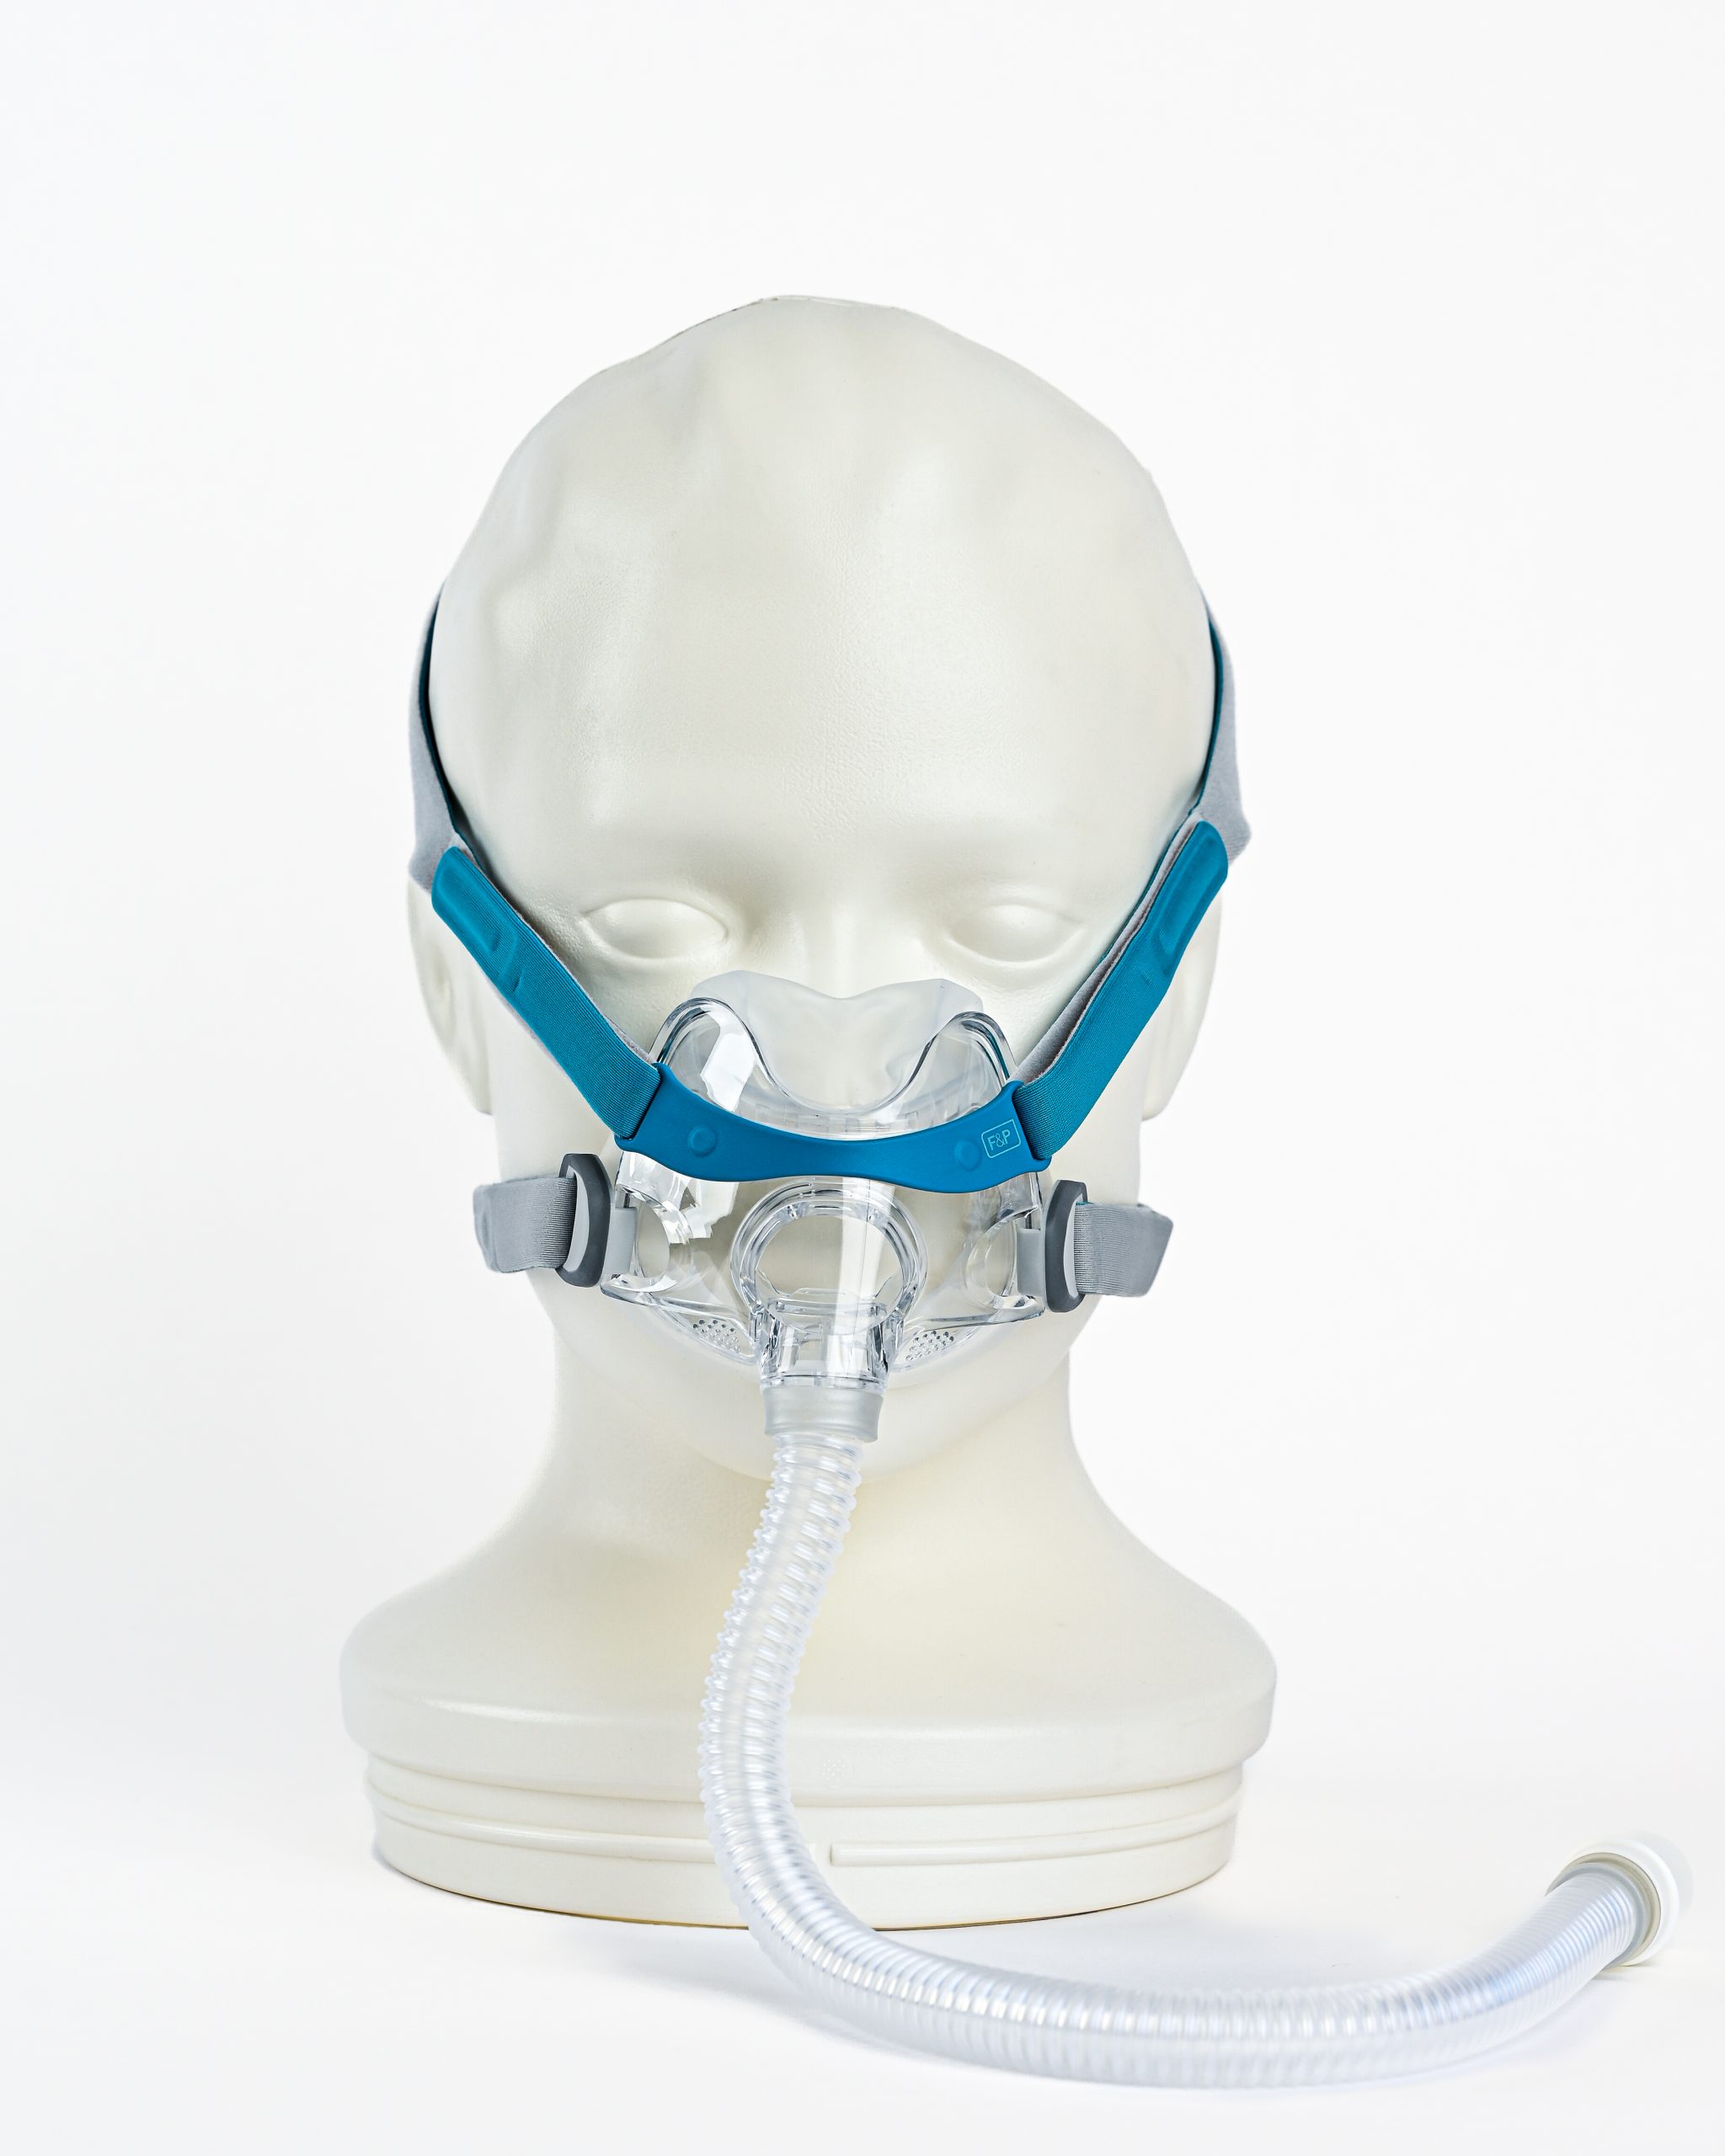 Masque facial Evora full - Euro-cpap : appareils CPAP pour l'apnée